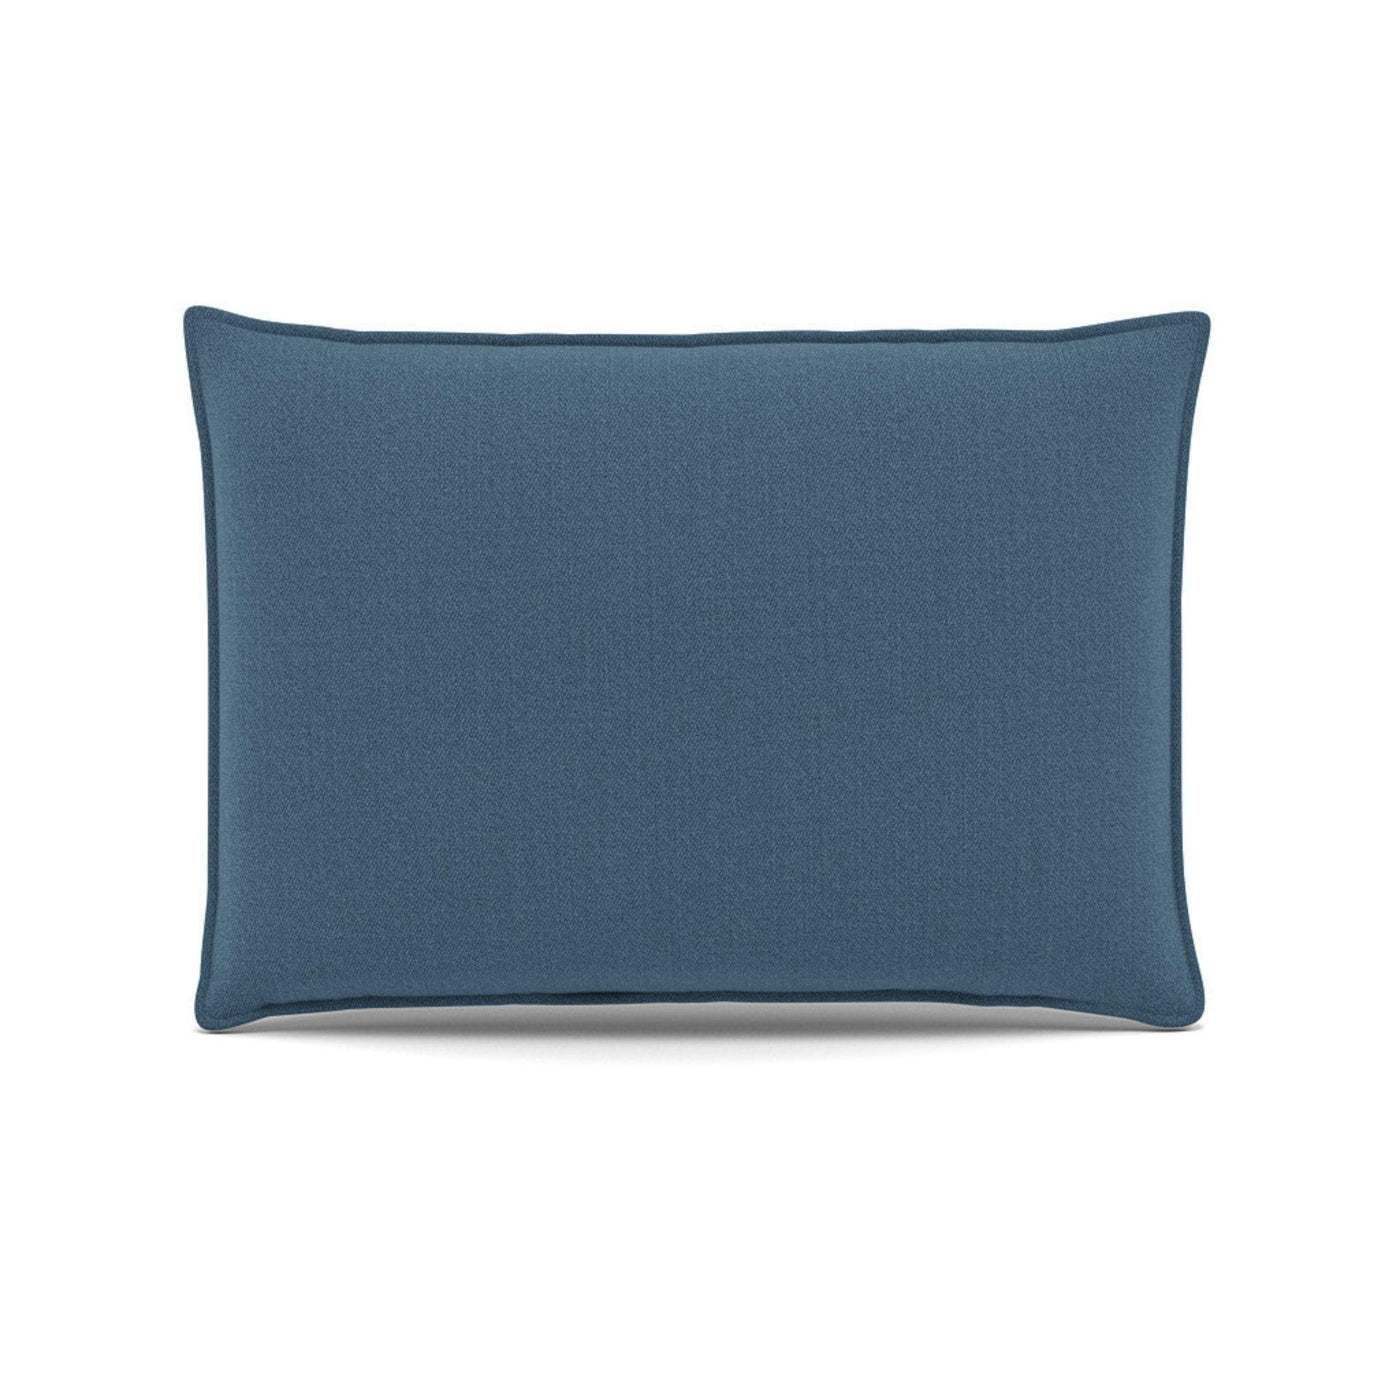 Muutos In Situ Cushion for the In Situ Modular Sofa series in vidar 733, 70x50cm. Made to order from someday designs. #colour_vidar-733